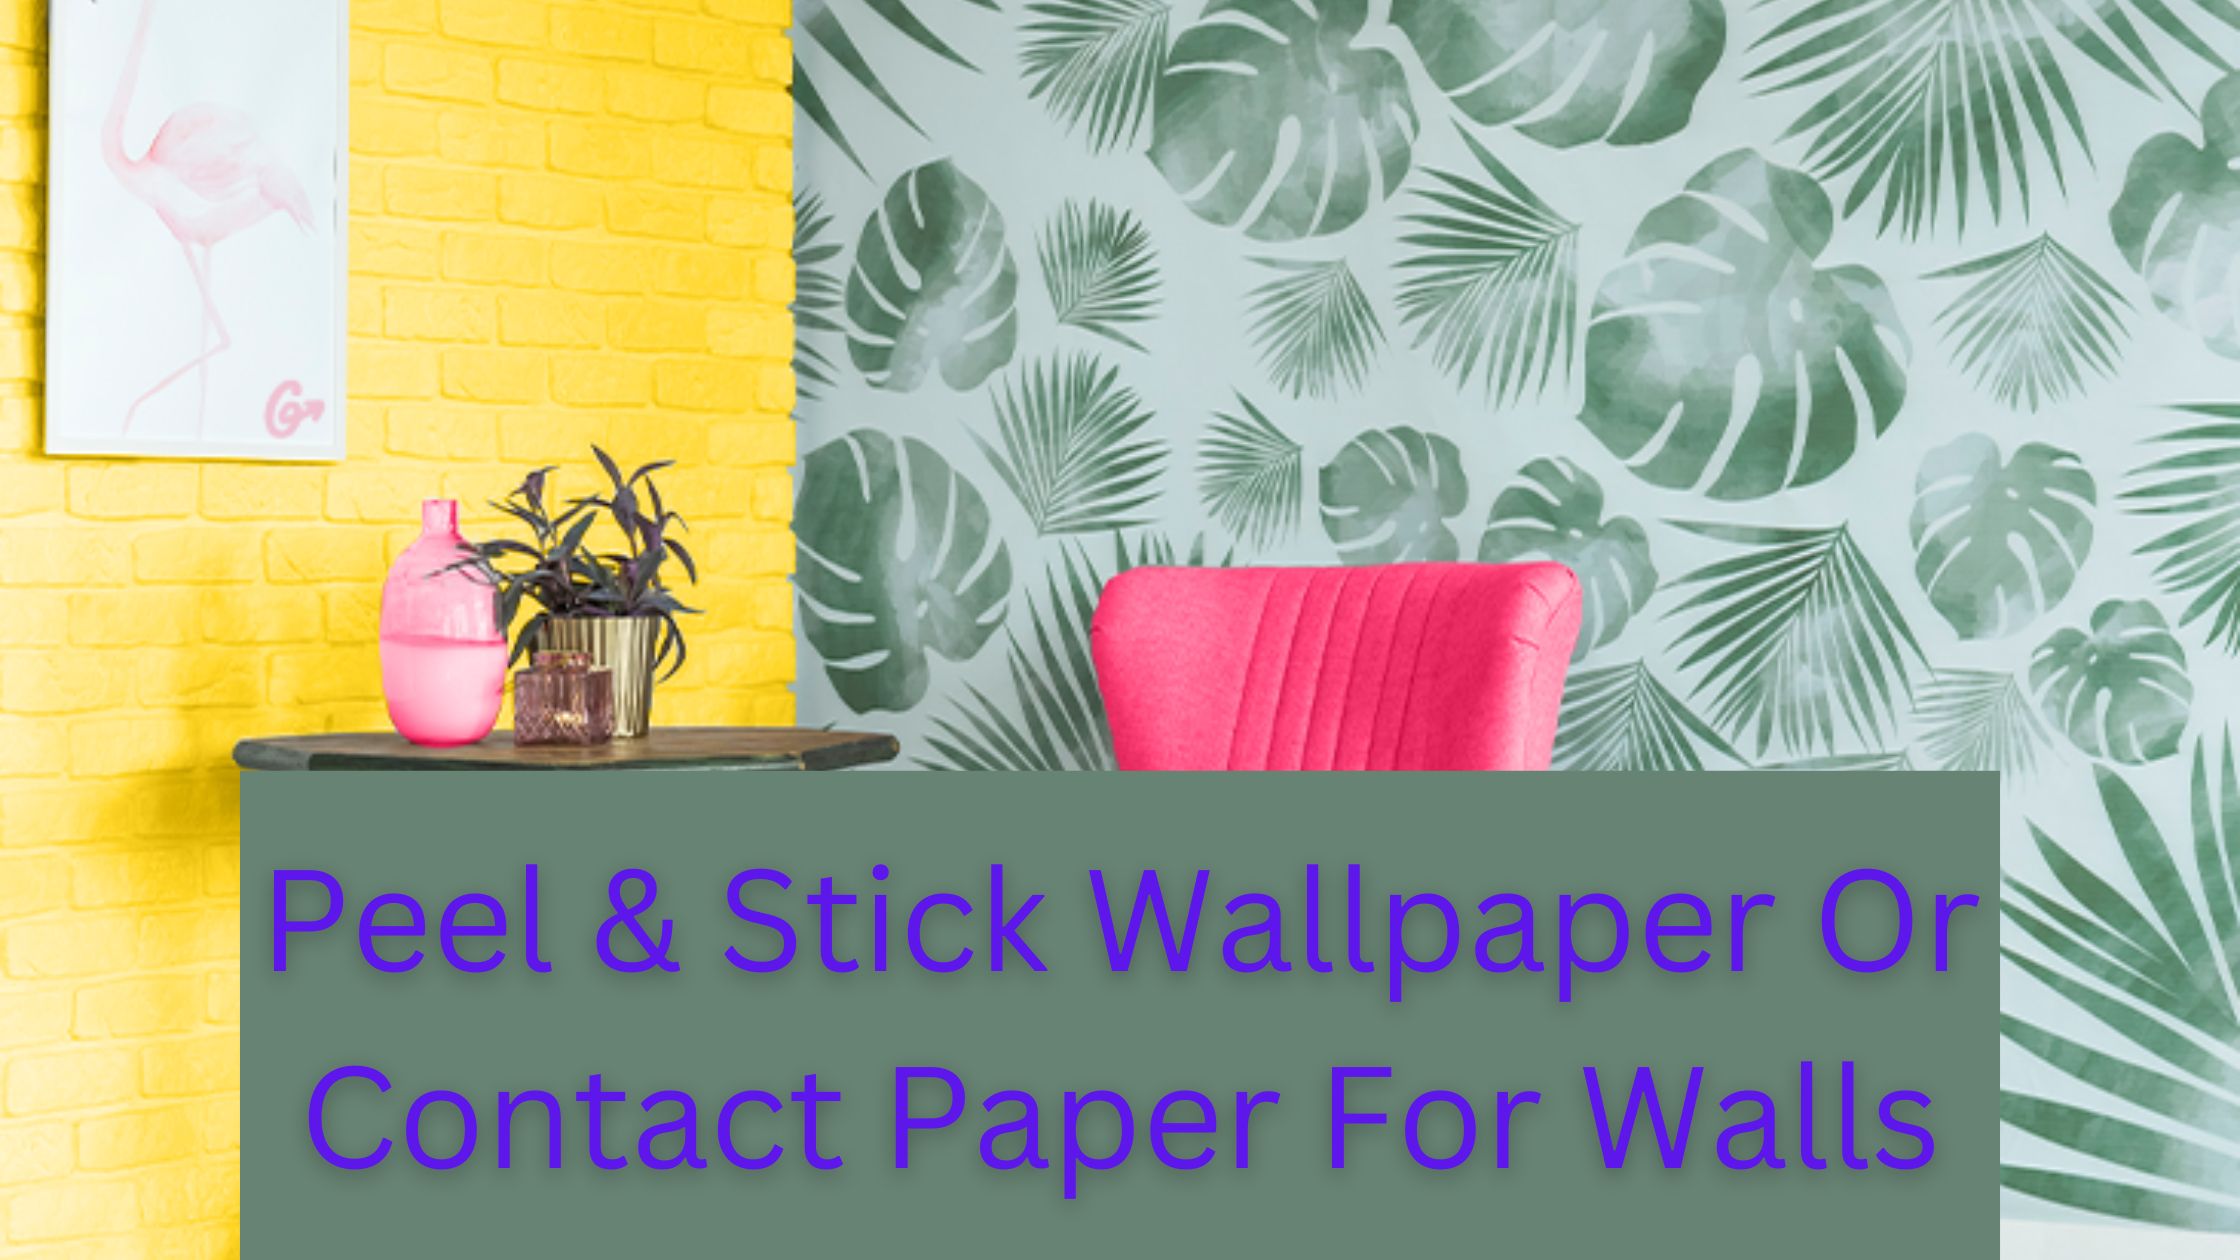 Peel & Stick Wallpaper Or Contact Paper